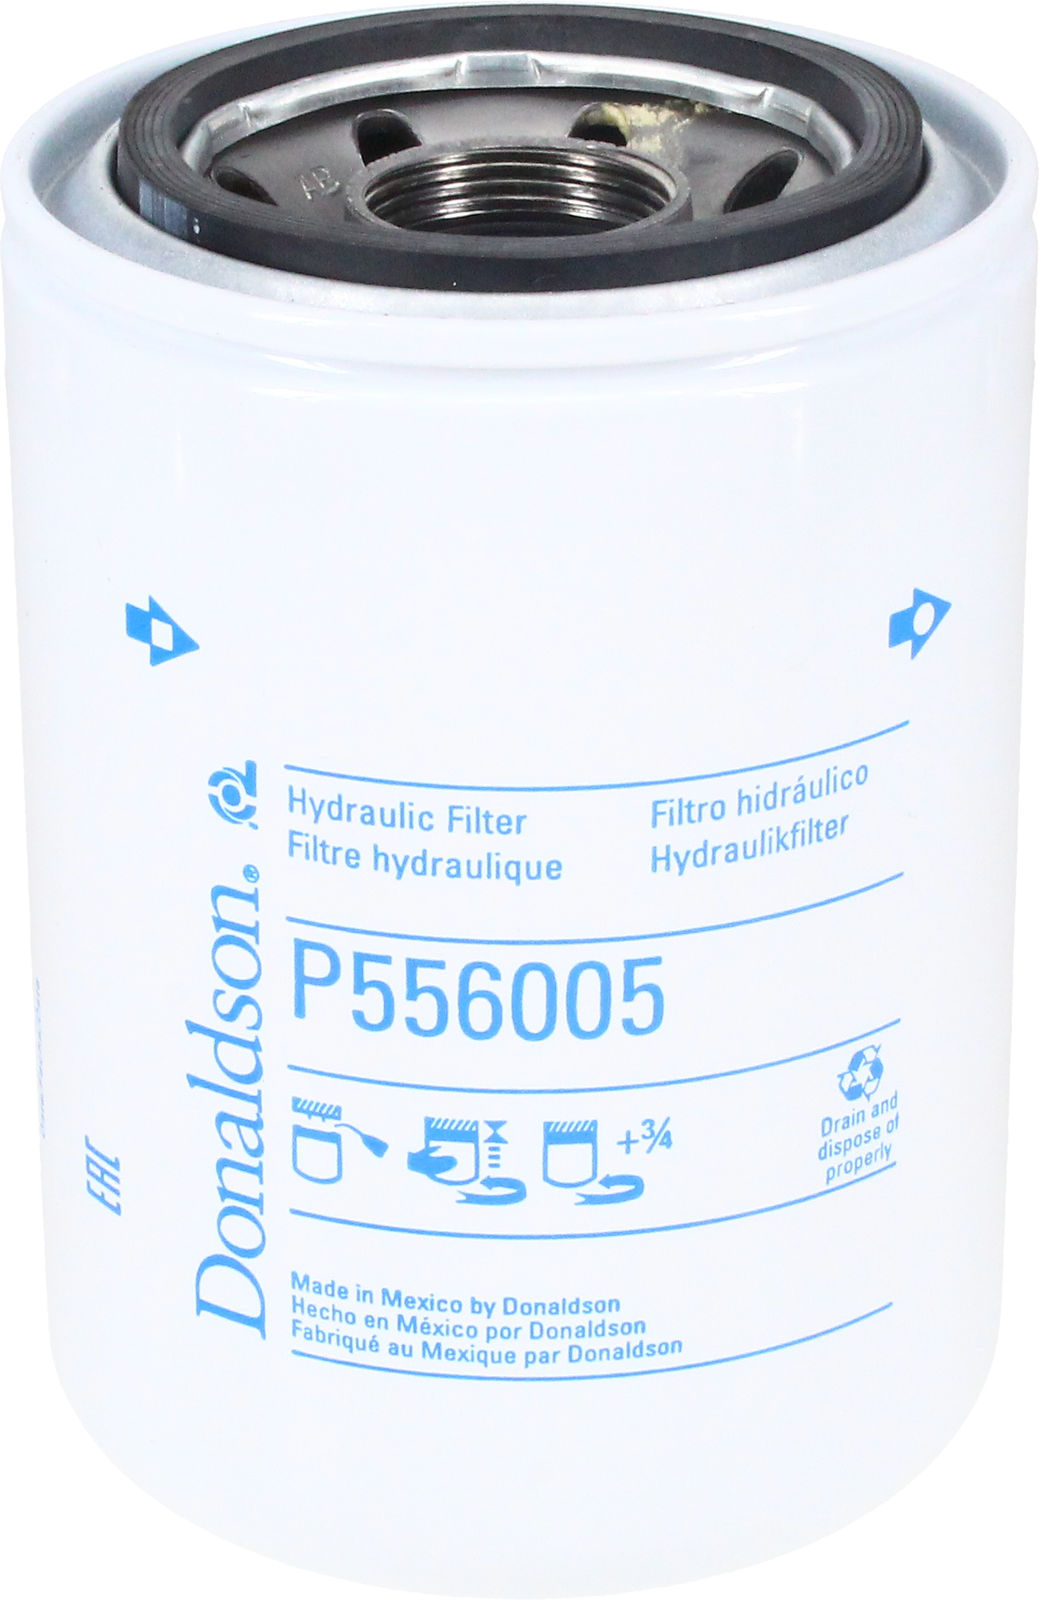 Hydraulic Filter P556005 fits Ford 4610SU 655 655C